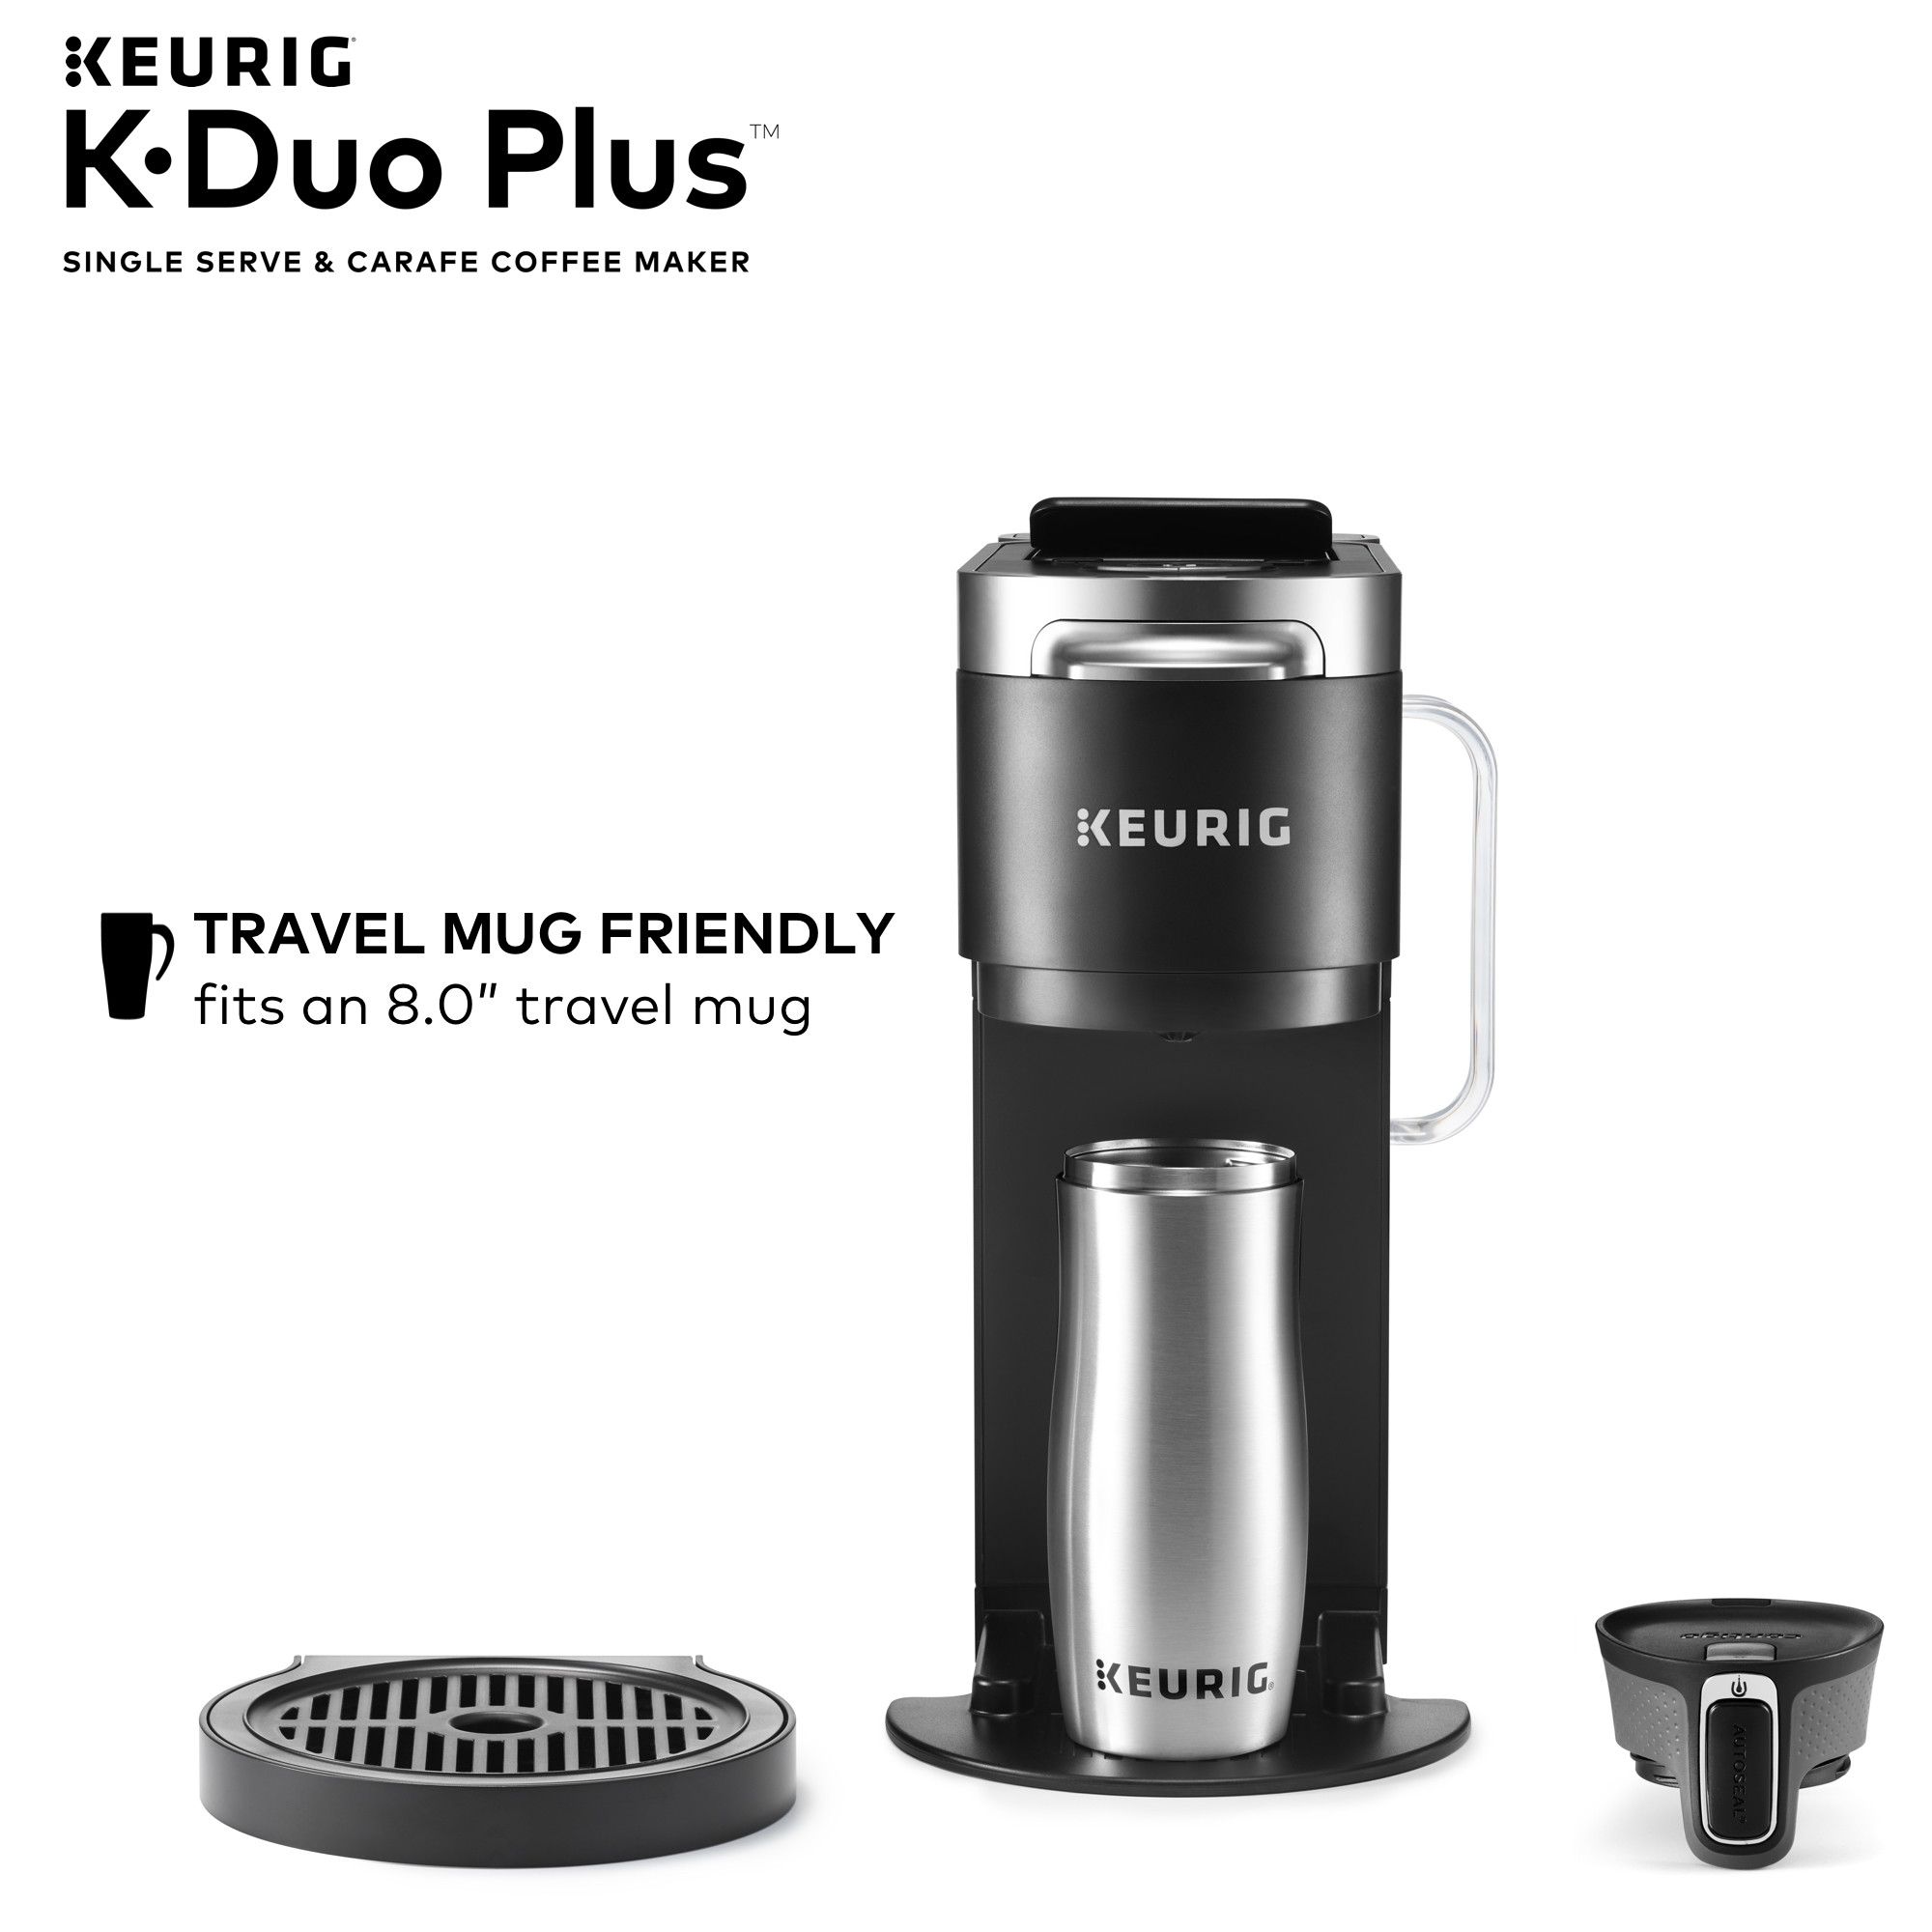 Keurig K-Duo Plus Single Serve & Carafe Coffee Maker - image 15 of 25